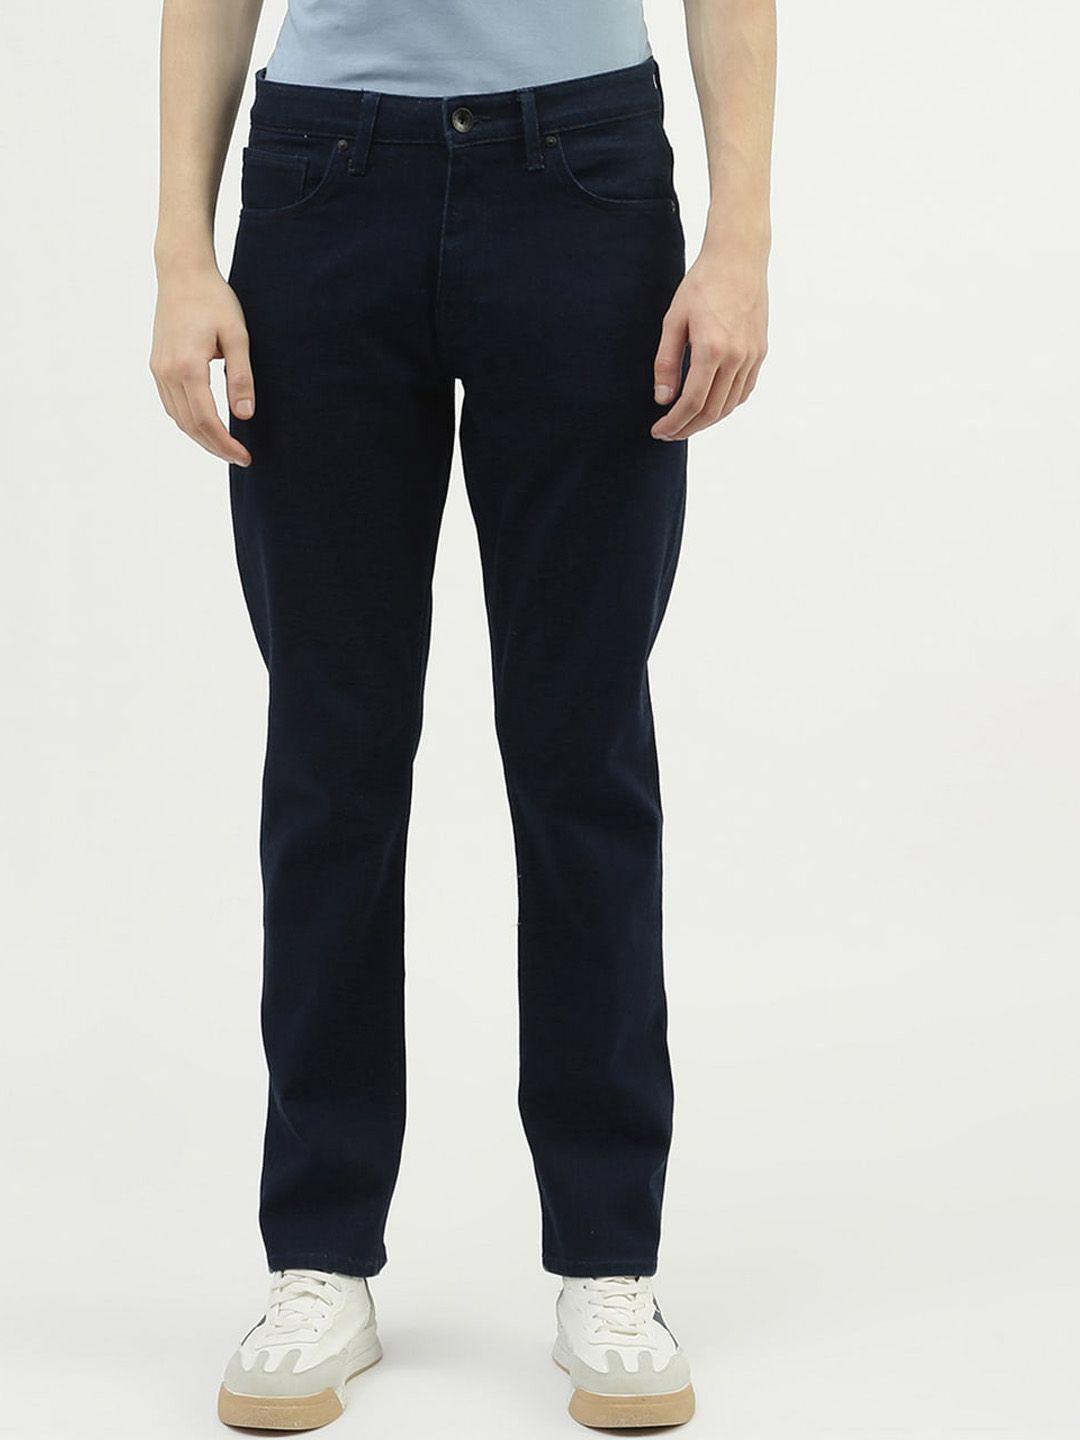 united colors of benetton men cotton regular fit mid-rise jeans